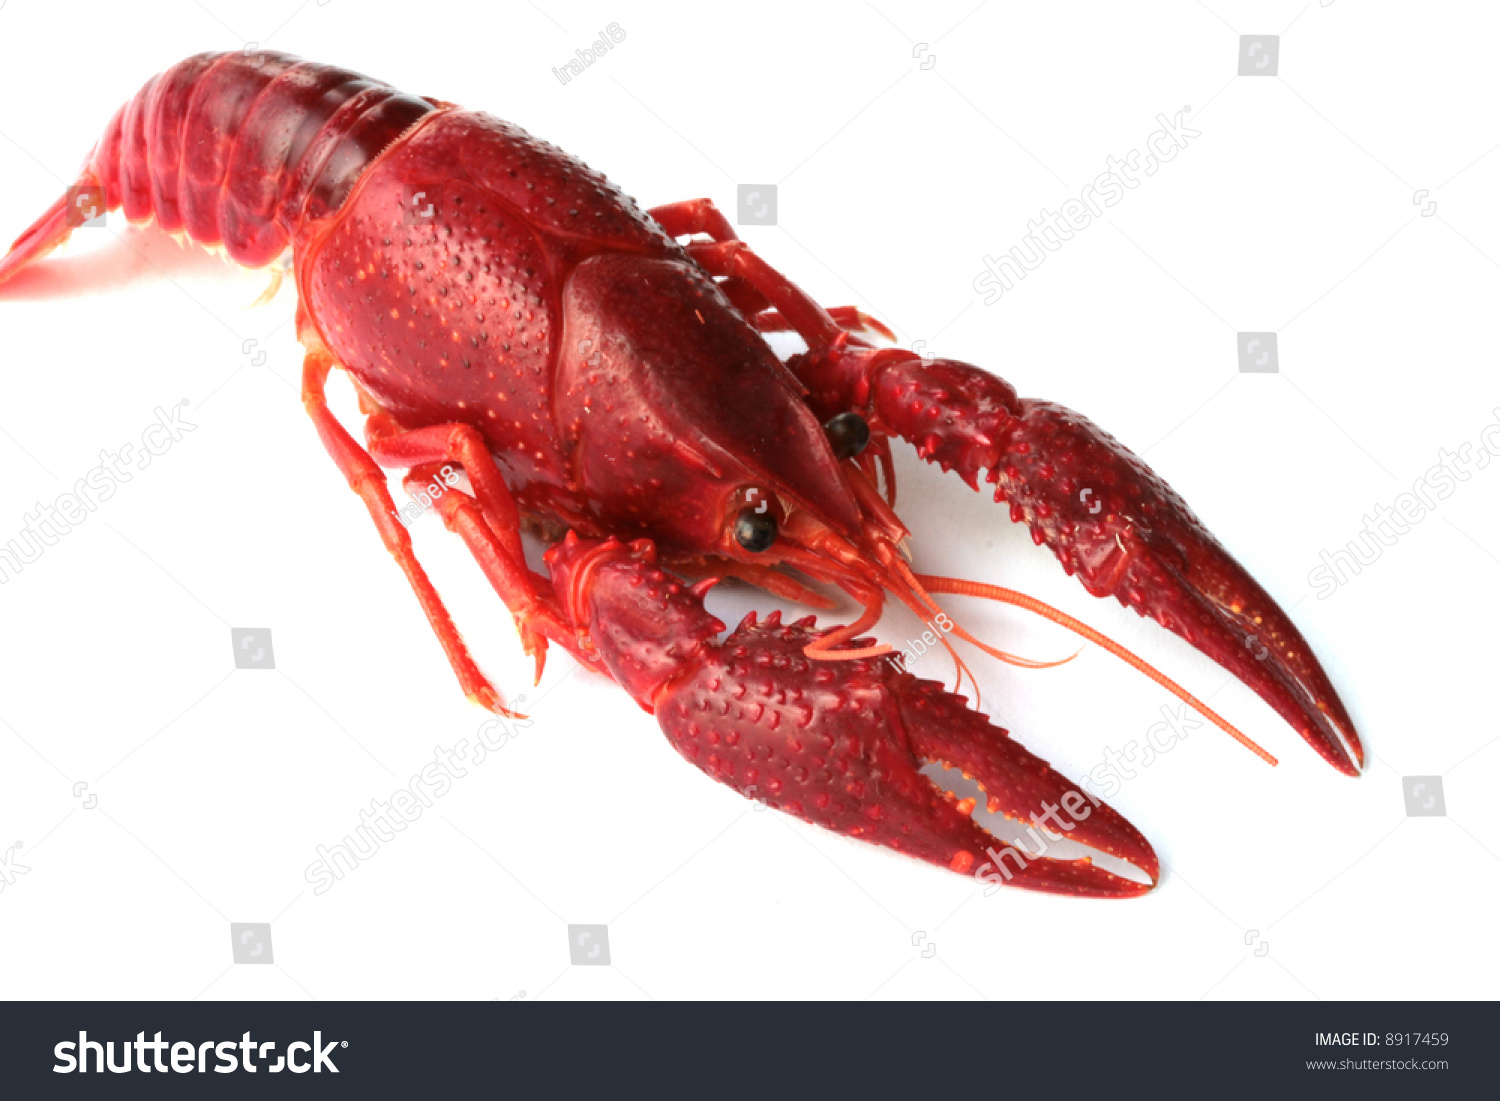 Red Crawfish On White Background Stock Photo 8917459 - Shutterstock